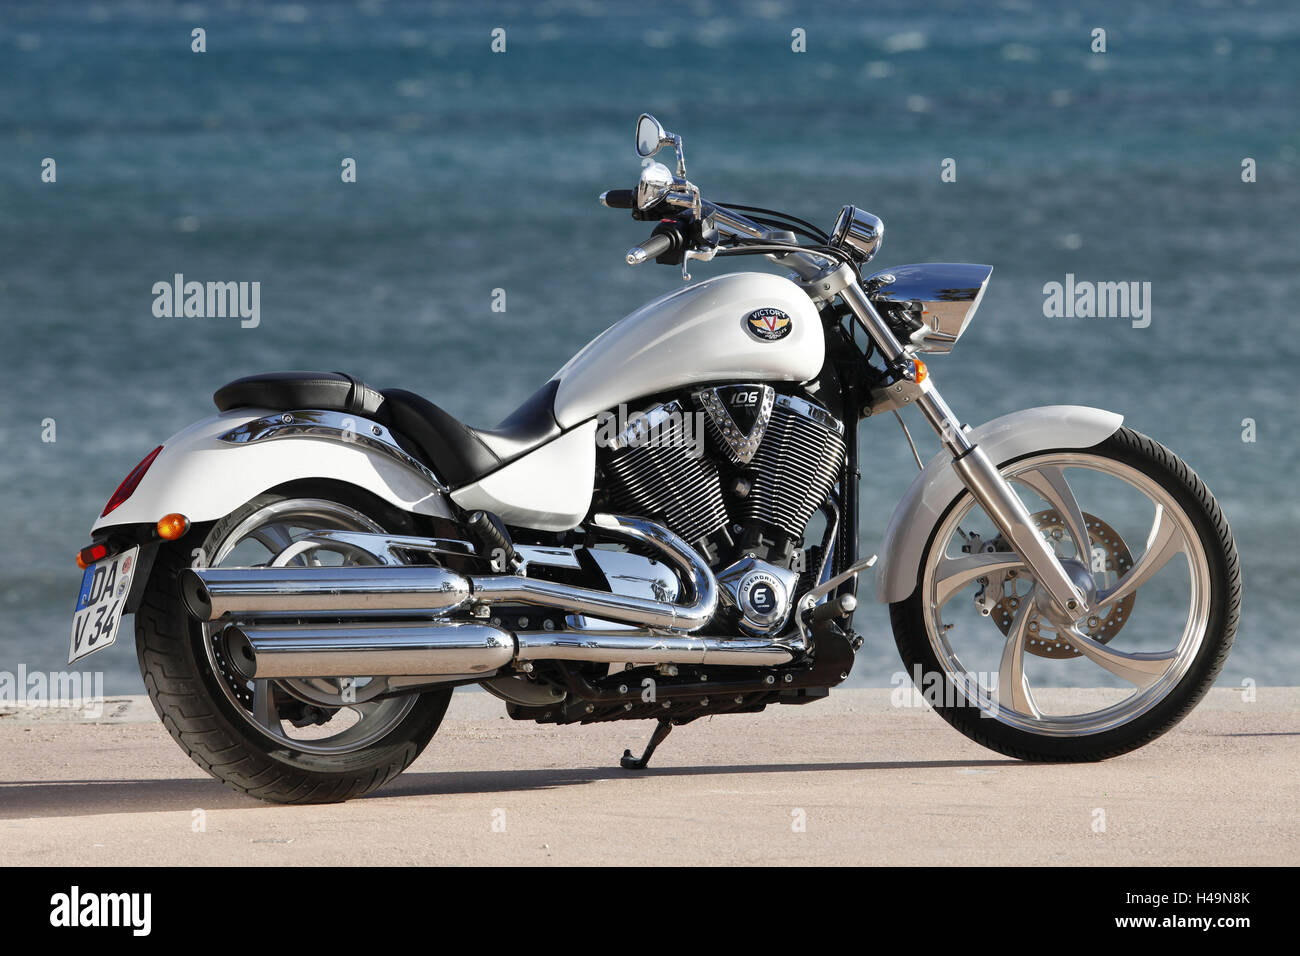 Motorcycle, Cruiser, Victory, white metallic, sea in the background, diagonal, Stock Photo